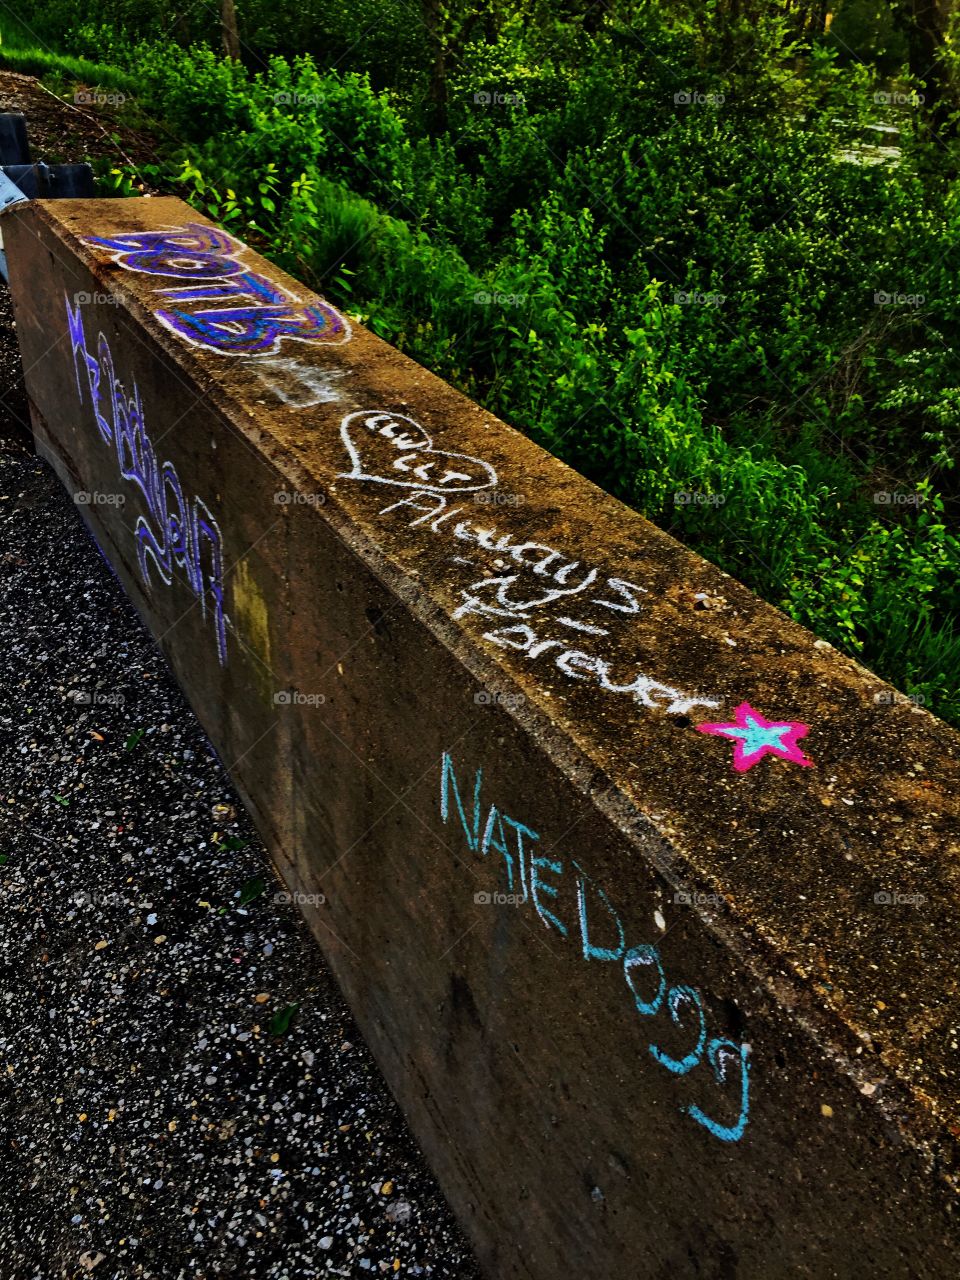 Some chalk graffiti art on the side of a county bridge 